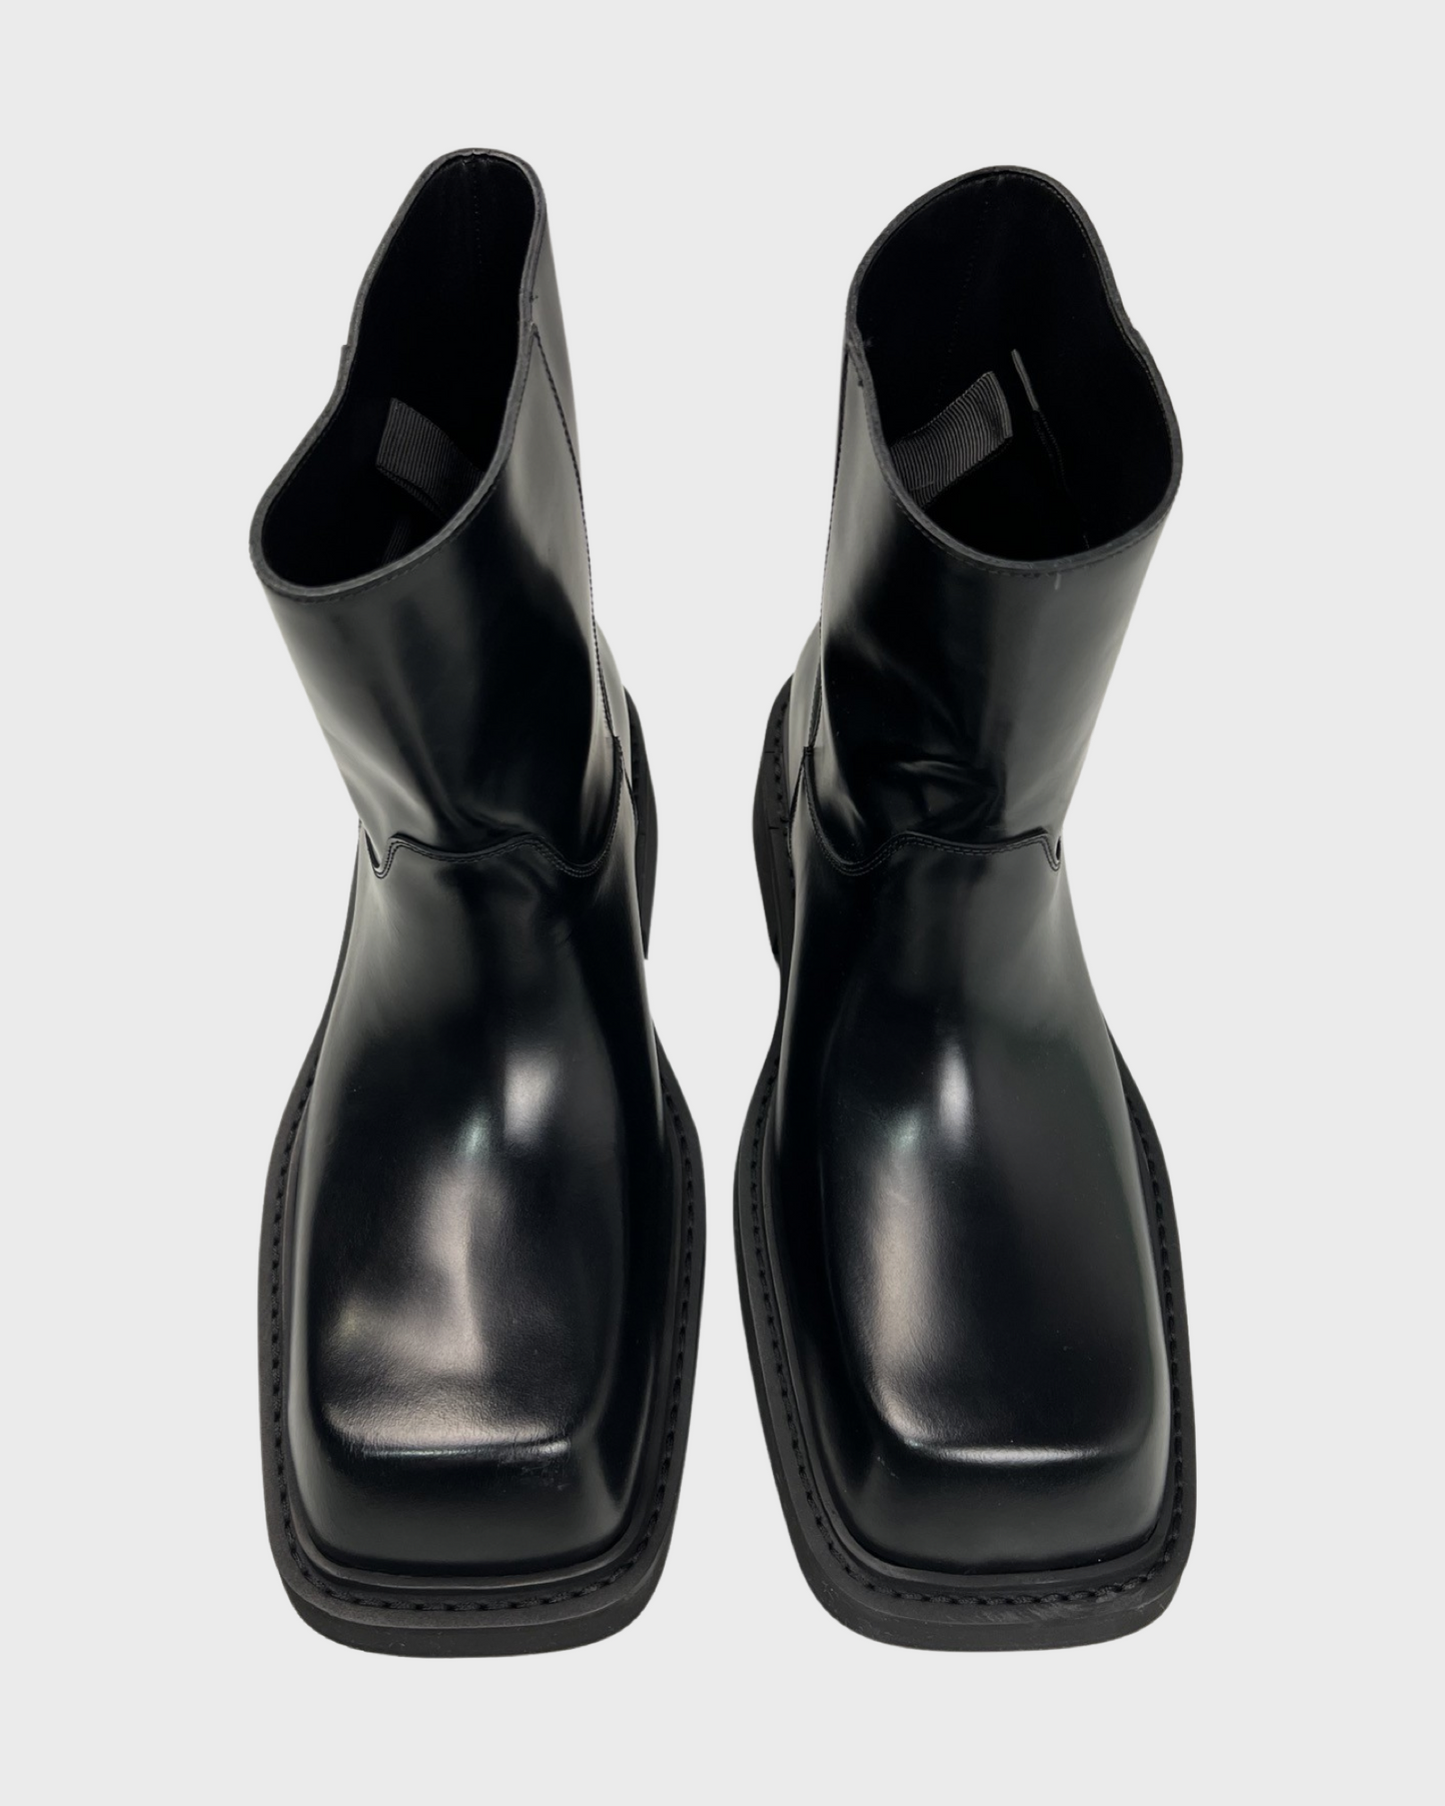 Balenciaga inspector leather Boots black SZ:41|42|43